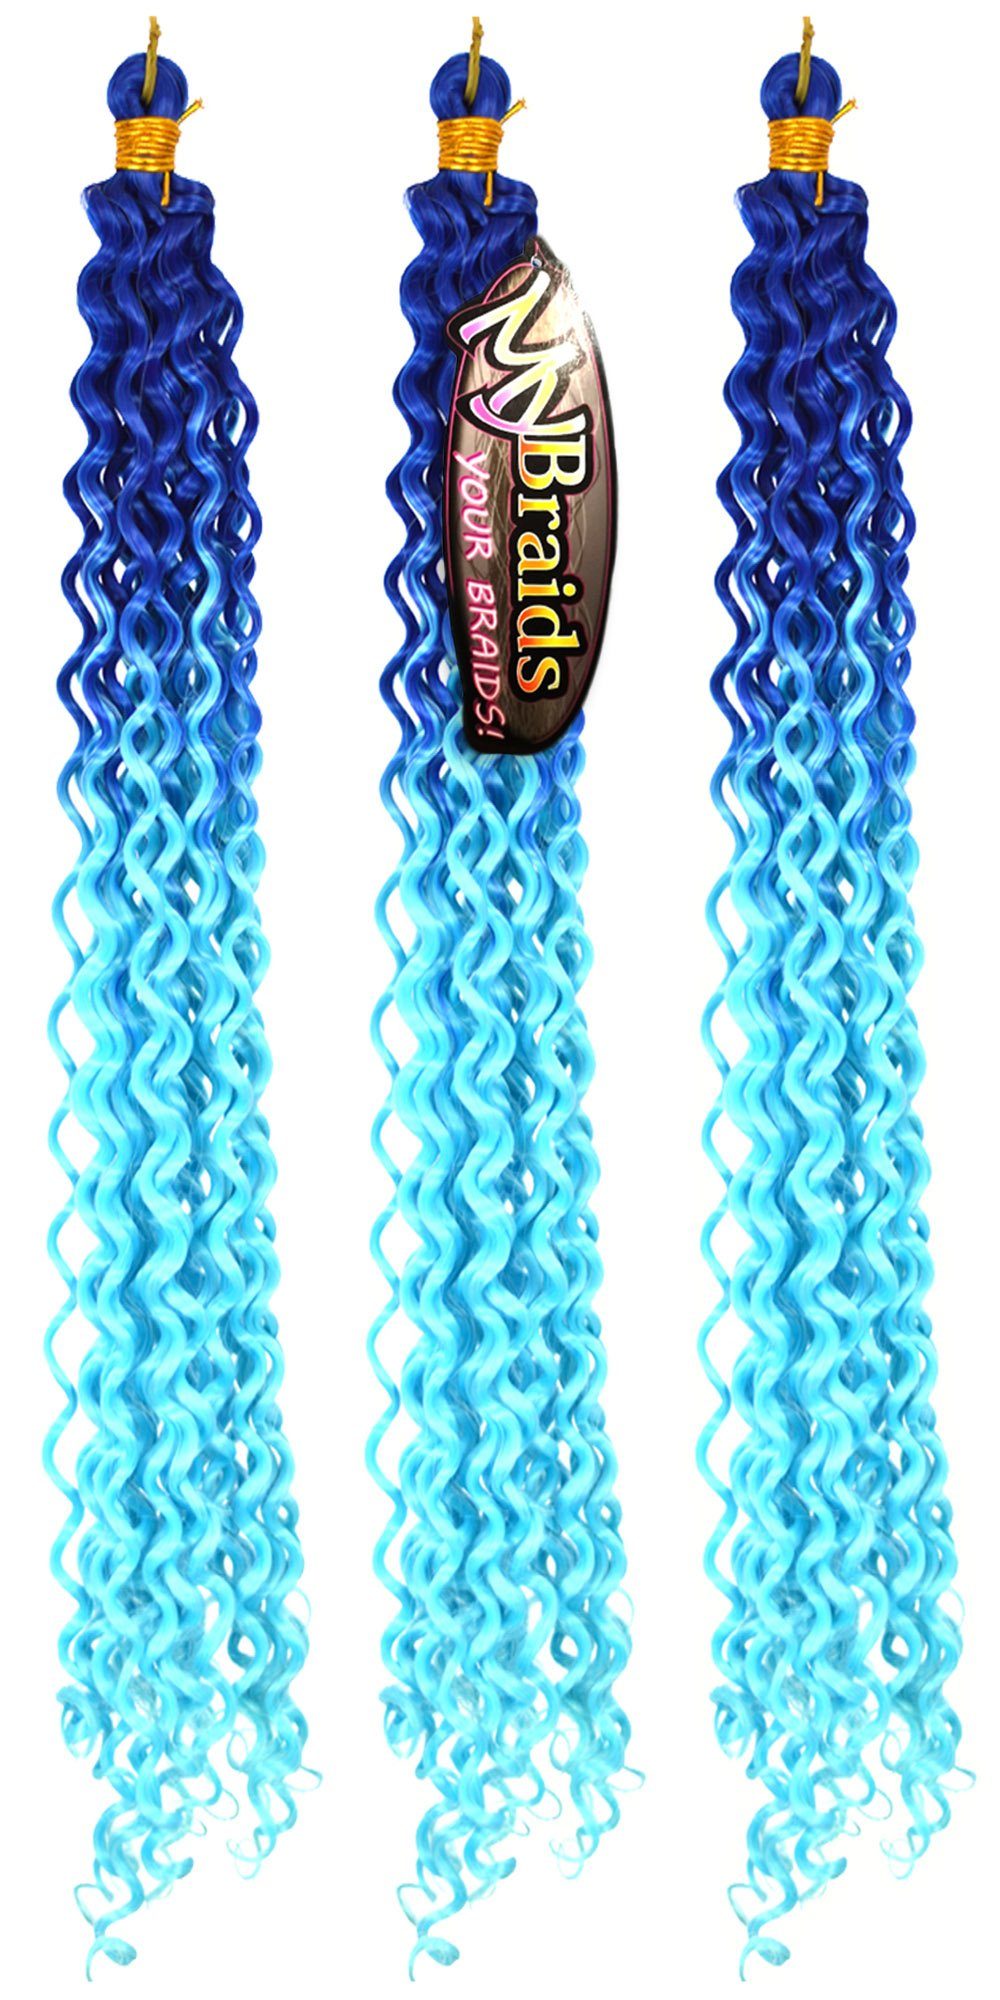 BRAIDS! Pack Braids Crochet Blau-Hellblau Deep YOUR Ombre Zöpfe Kunsthaar-Extension 15-WS 3er MyBraids Flechthaar Wellig Wave